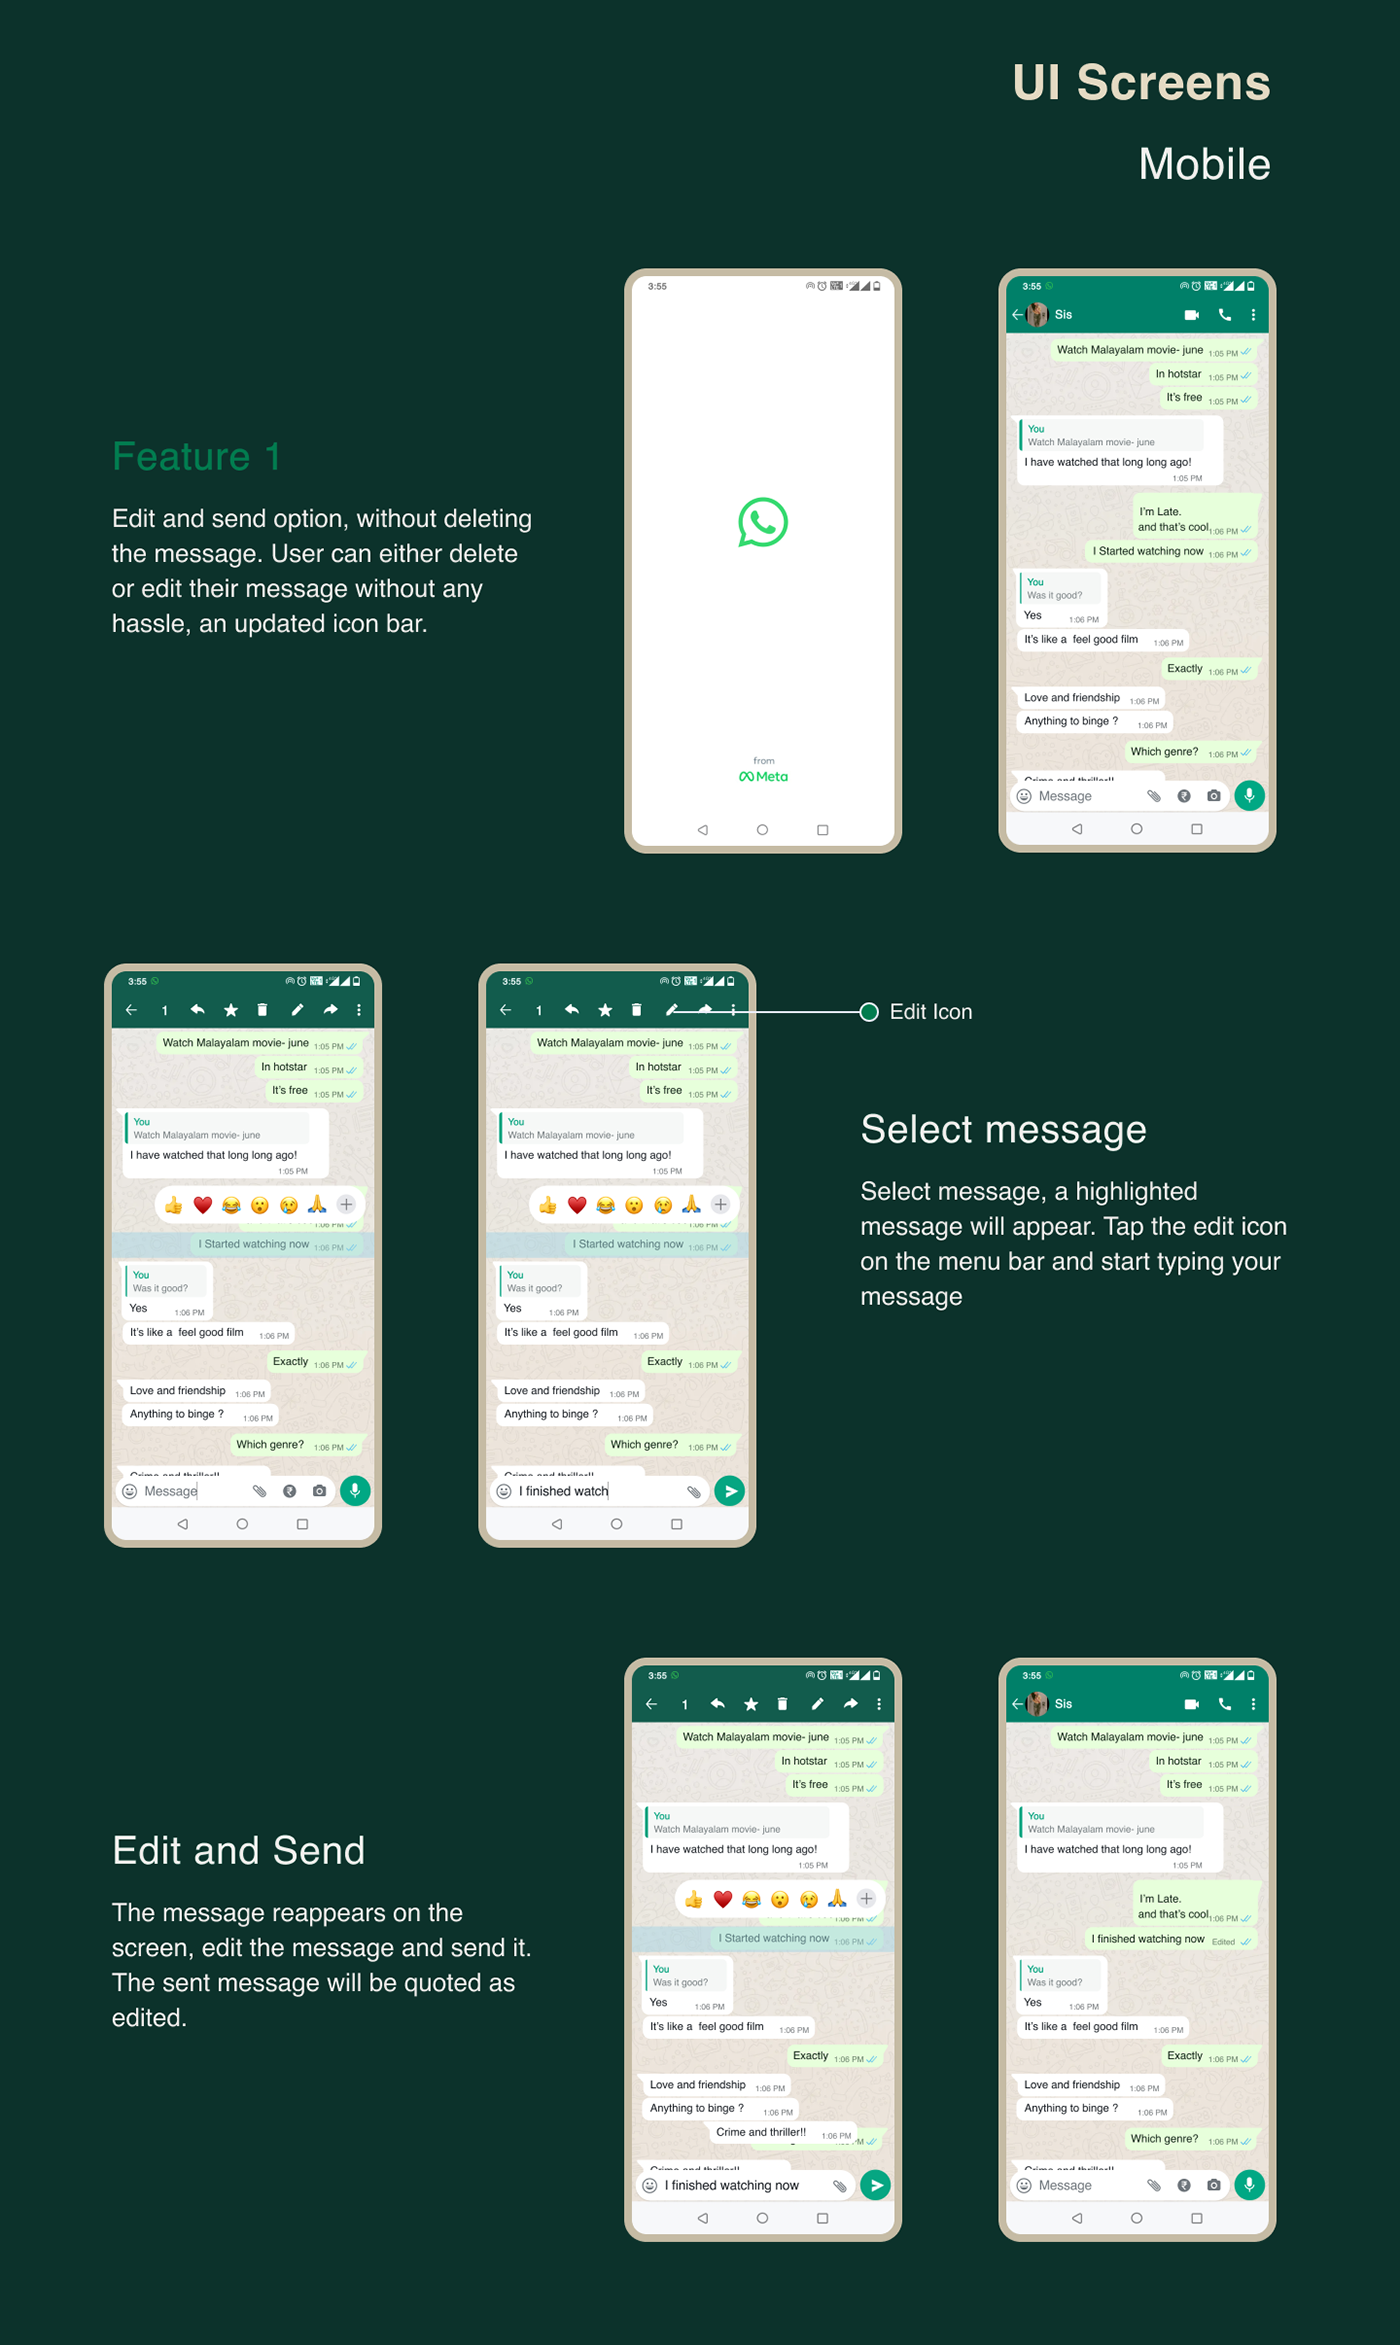 Case Study Responsive Responsive Design responsive website ui design ui ux UX design WhatsApp WhatsApp Redesign Whatsapp Status